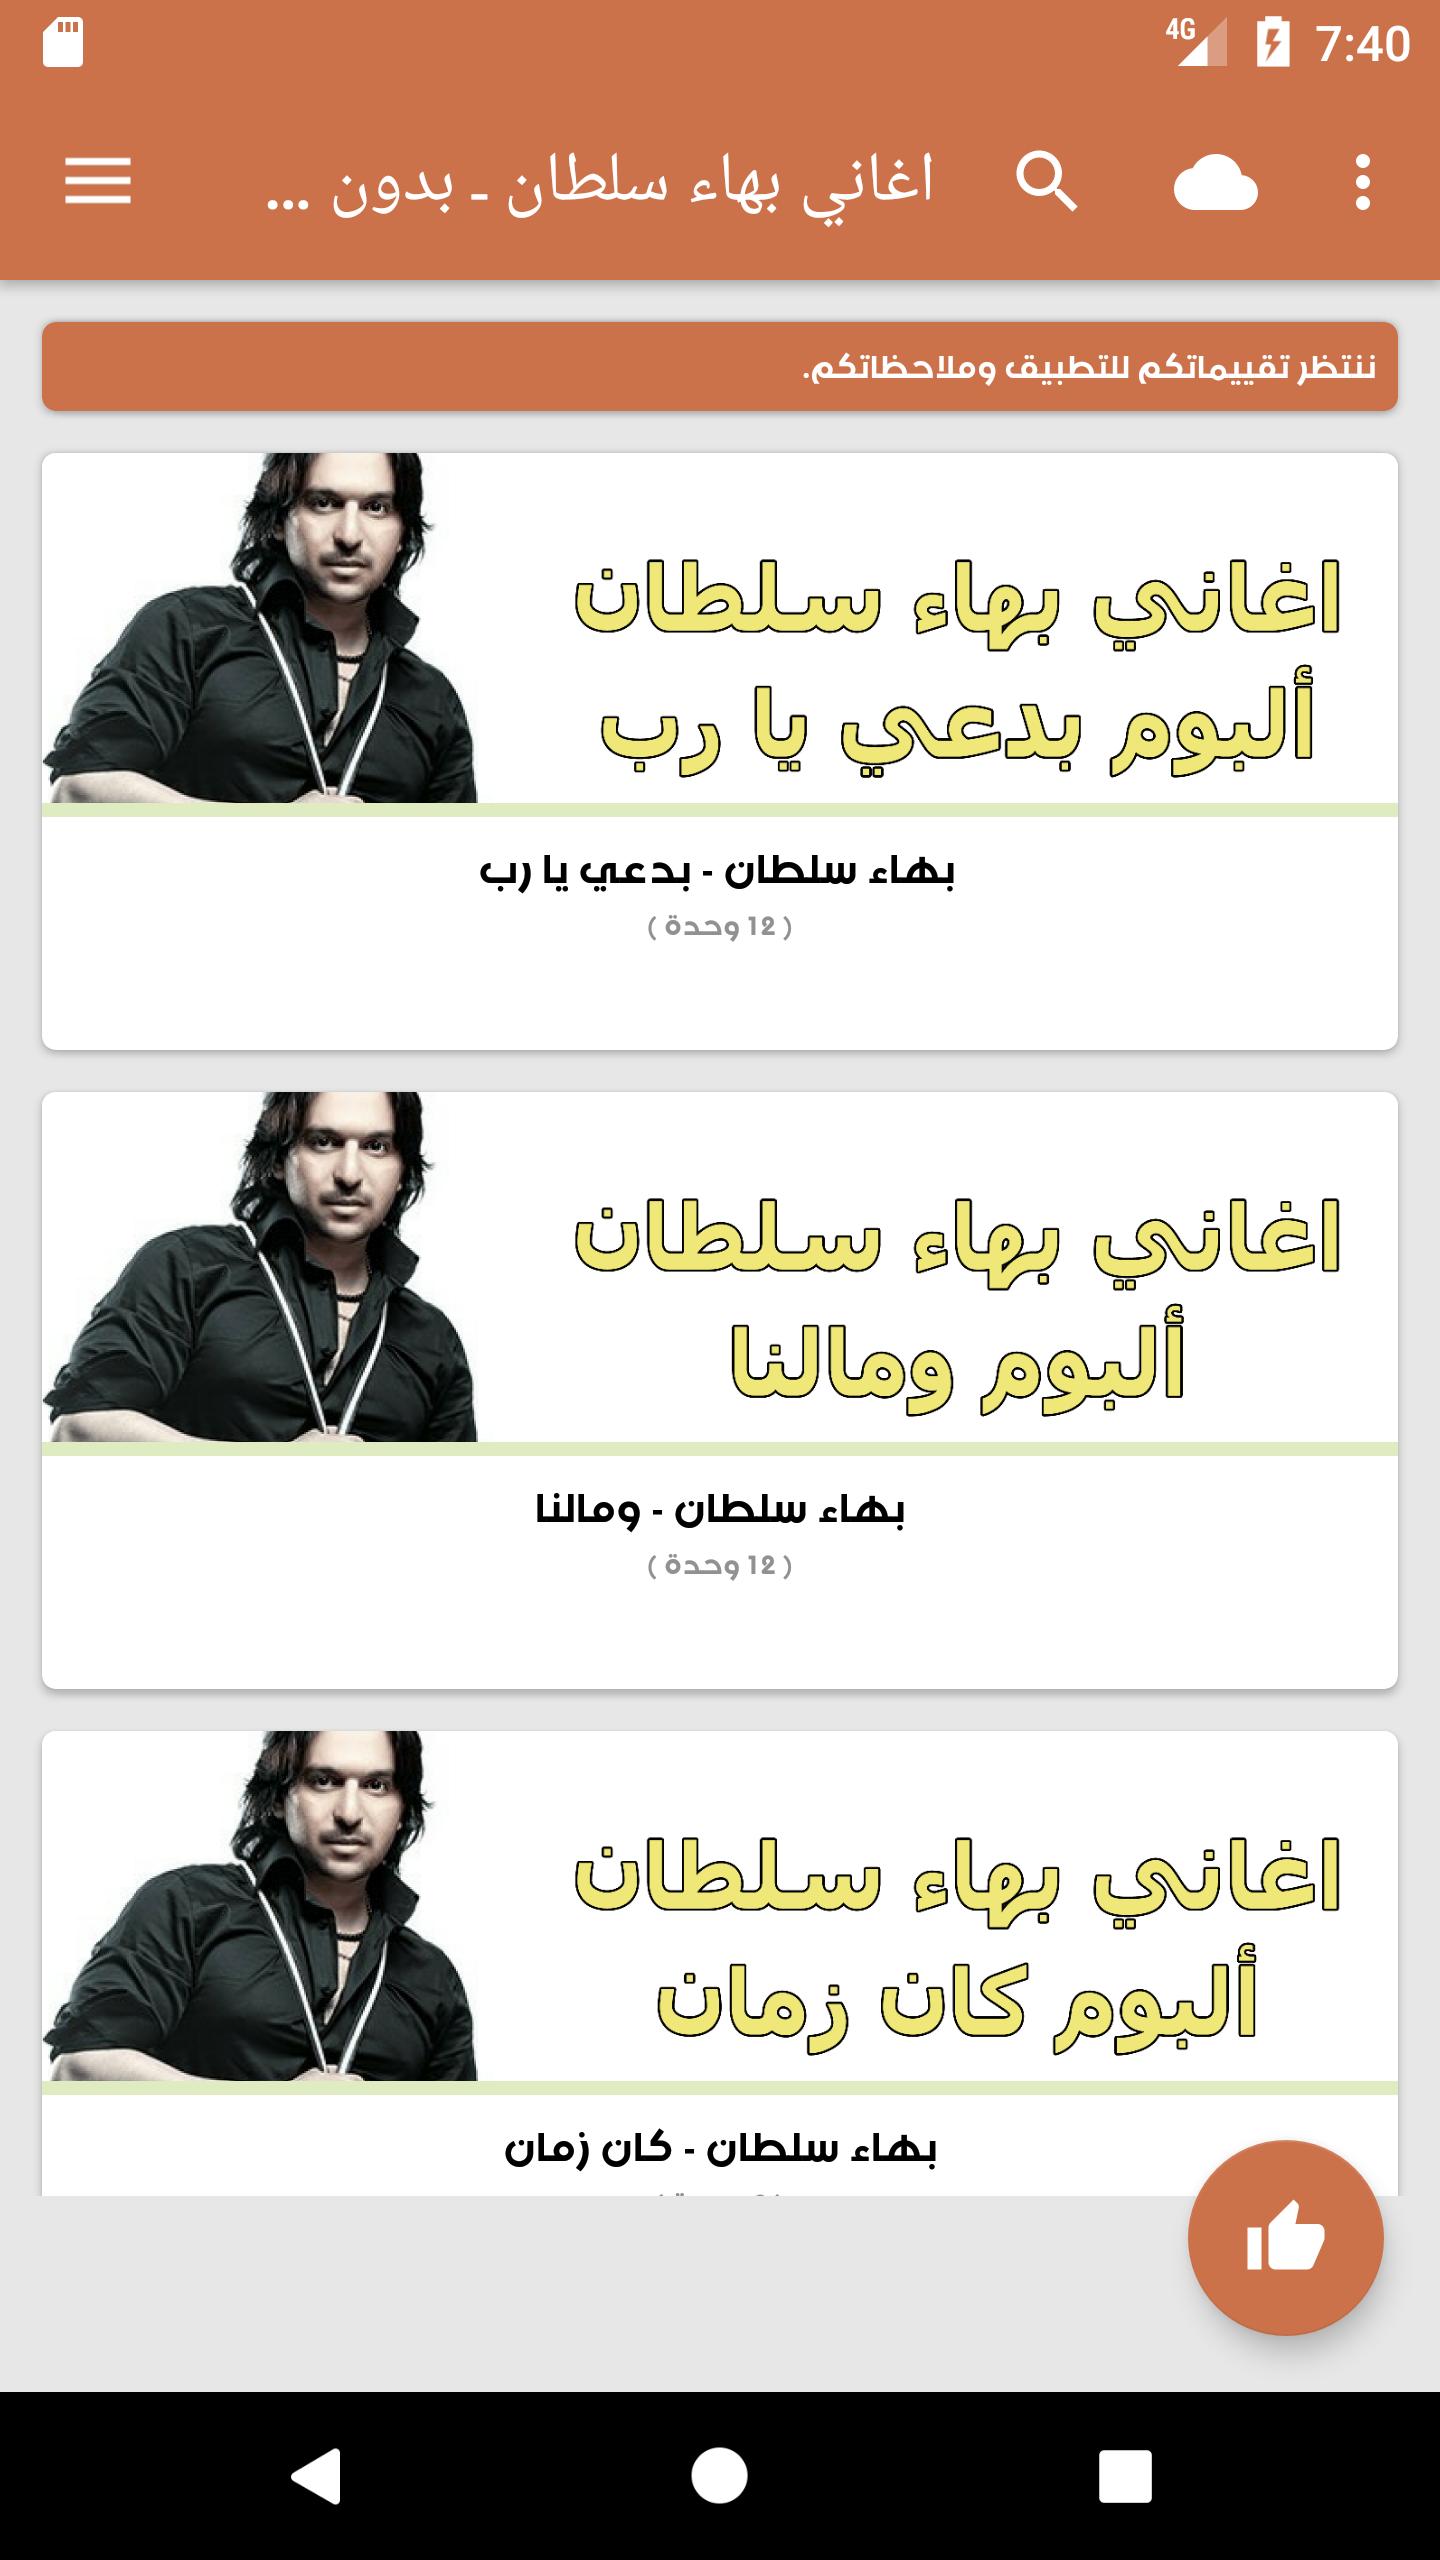 اغاني بهاء سلطان ـ بدون نت for Android - APK Download